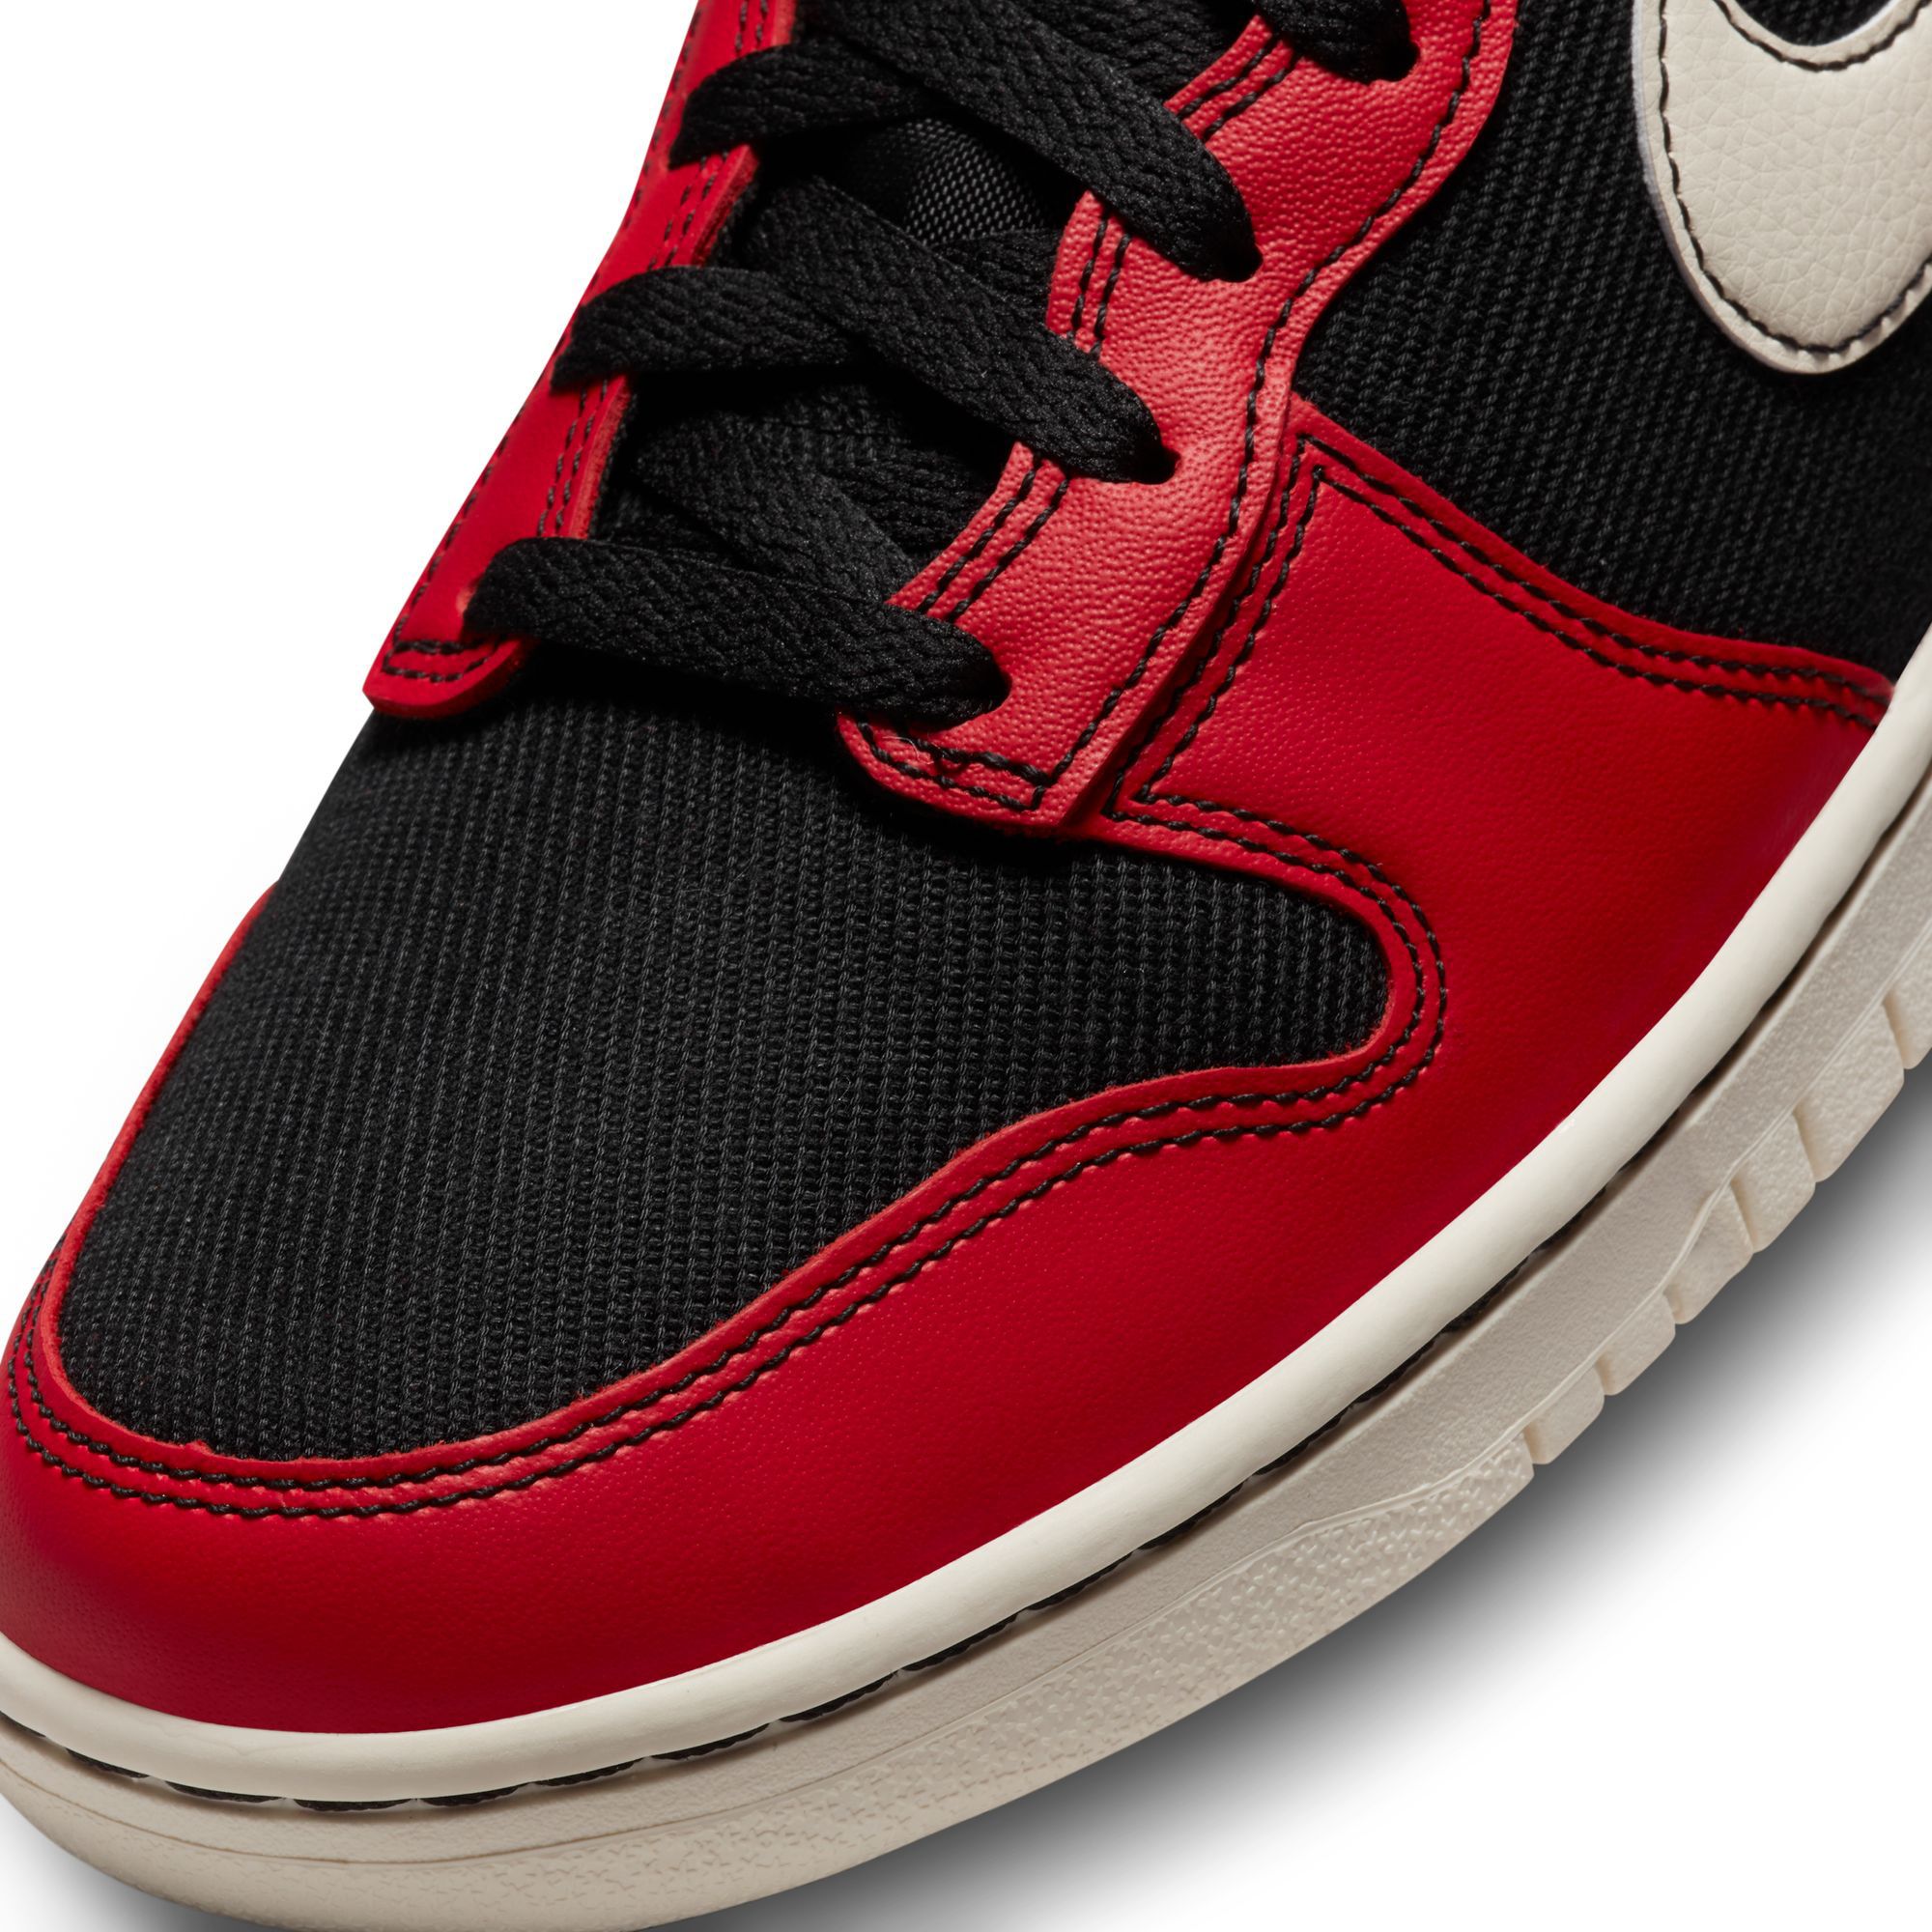 Nike Dunk High Retro SE Black / Pale Ivory - University Red